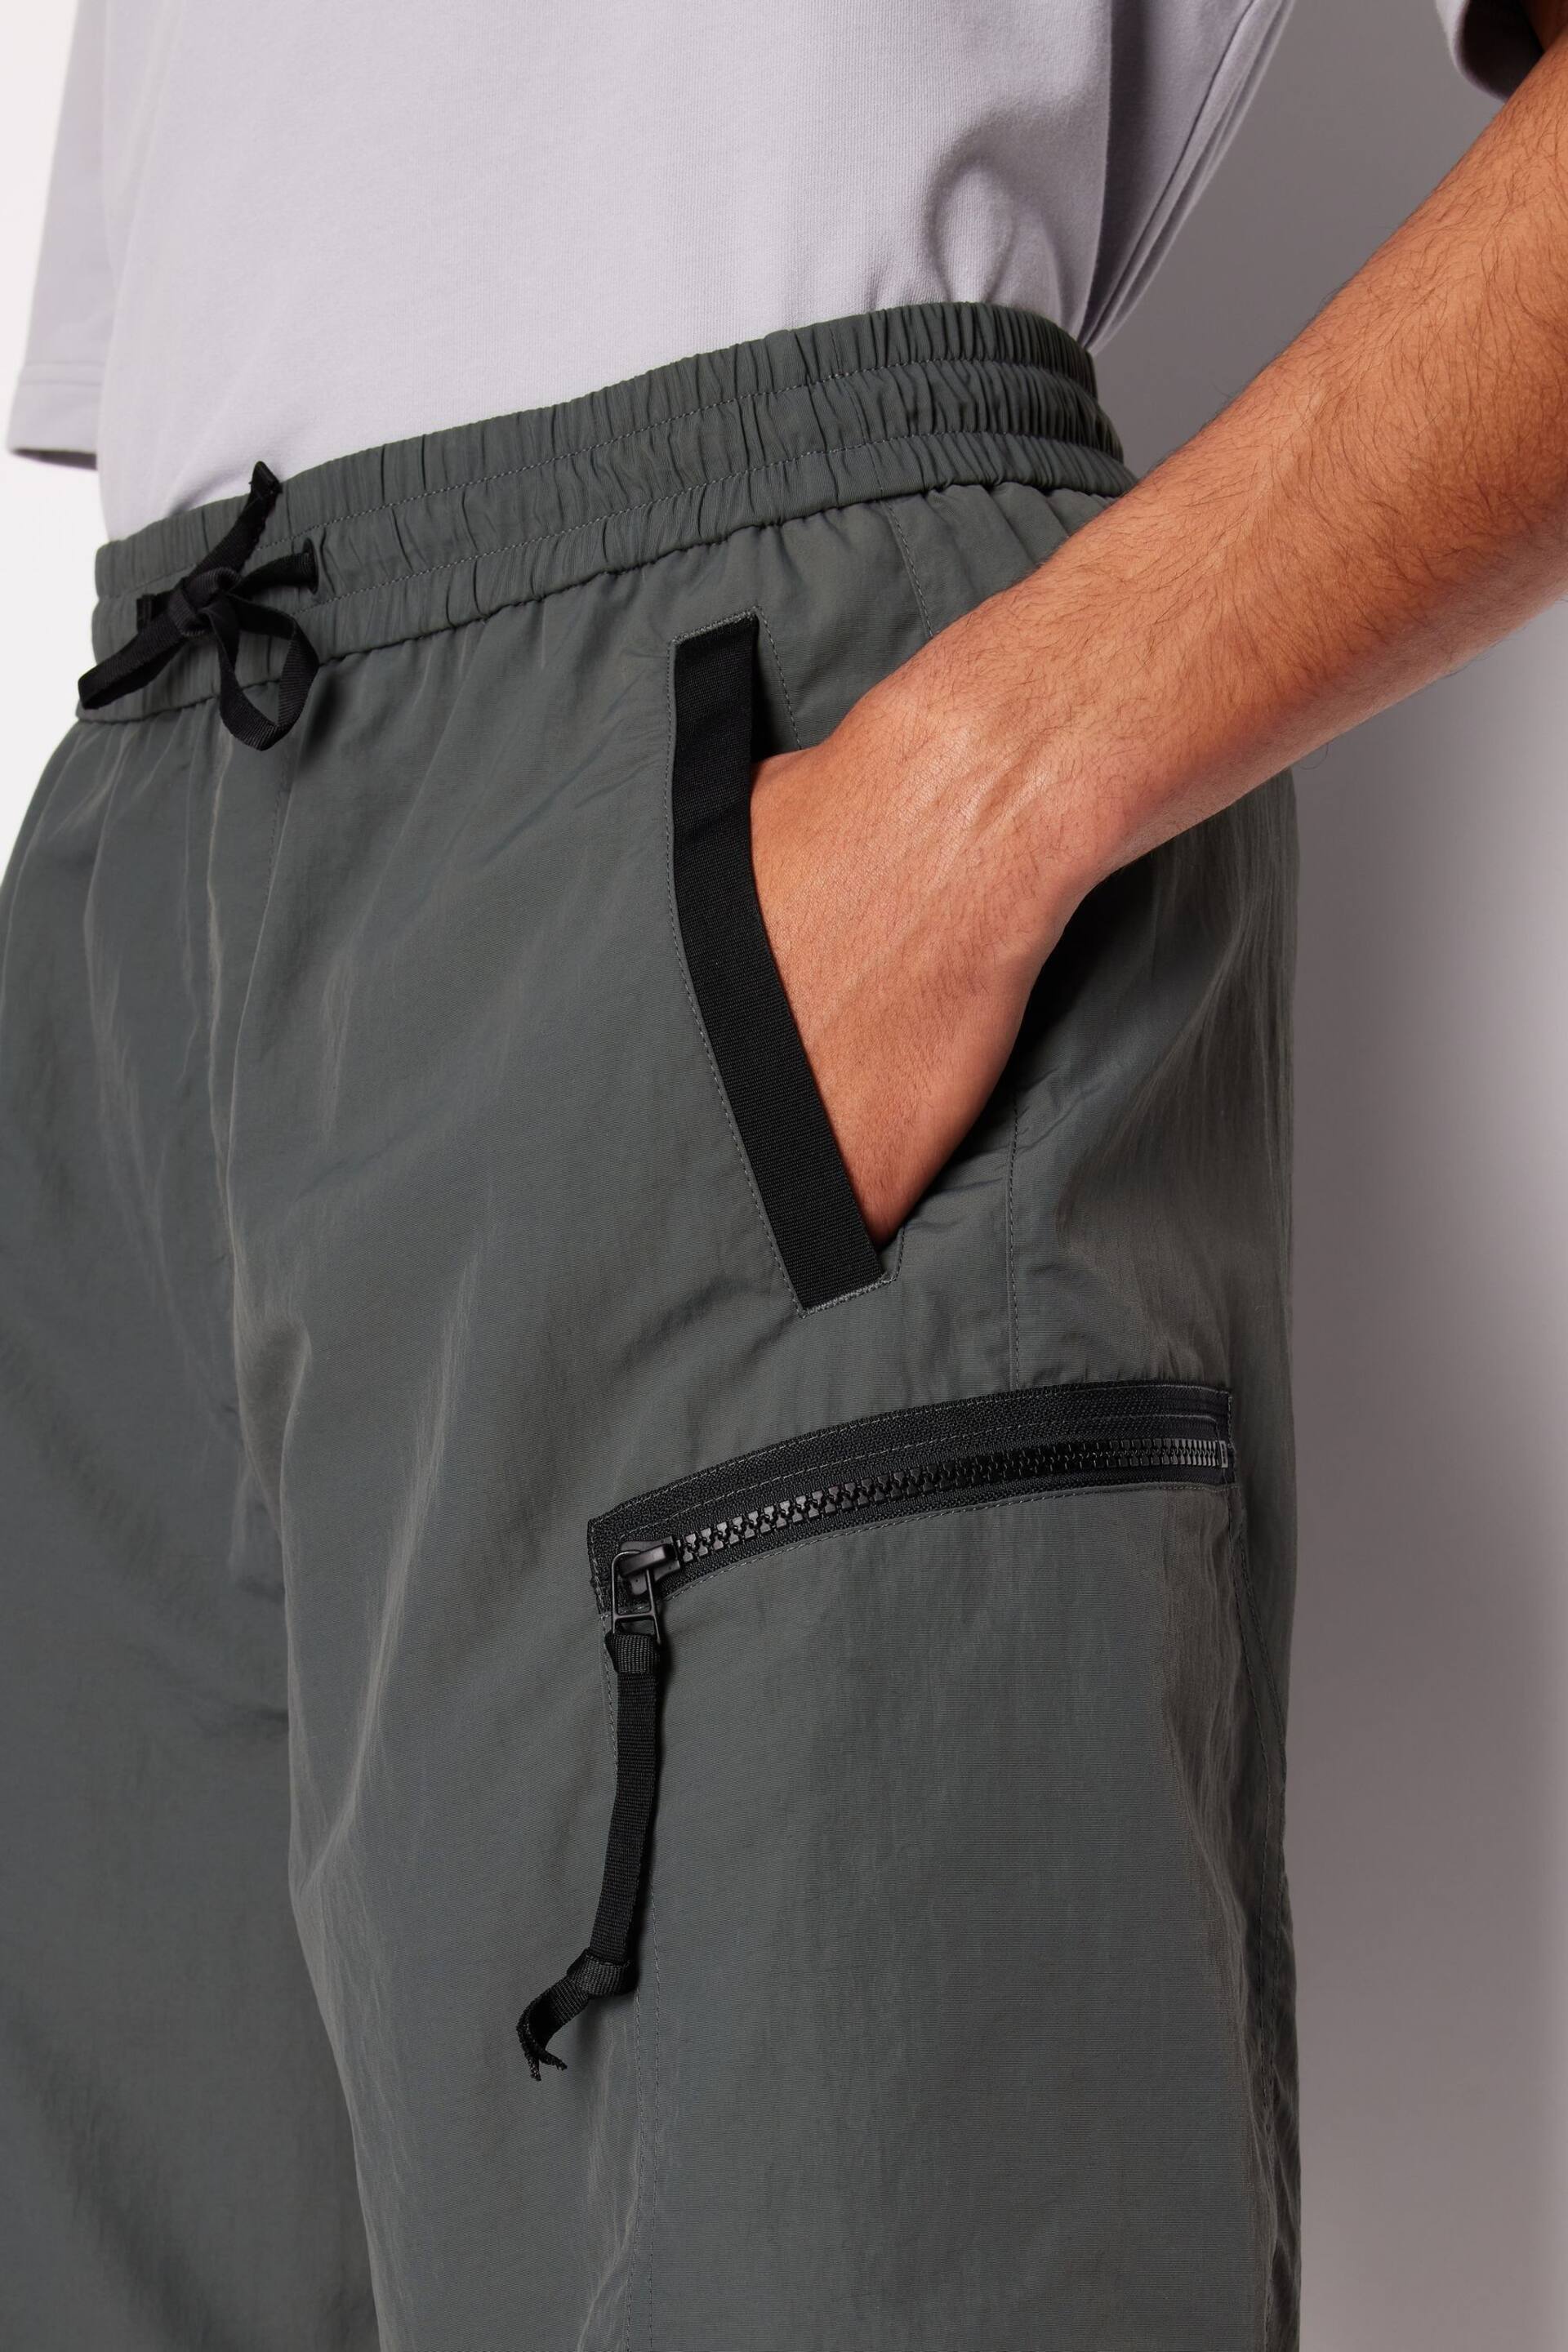 Armani Exchange Dark Grey Cargo Shorts - Image 6 of 8